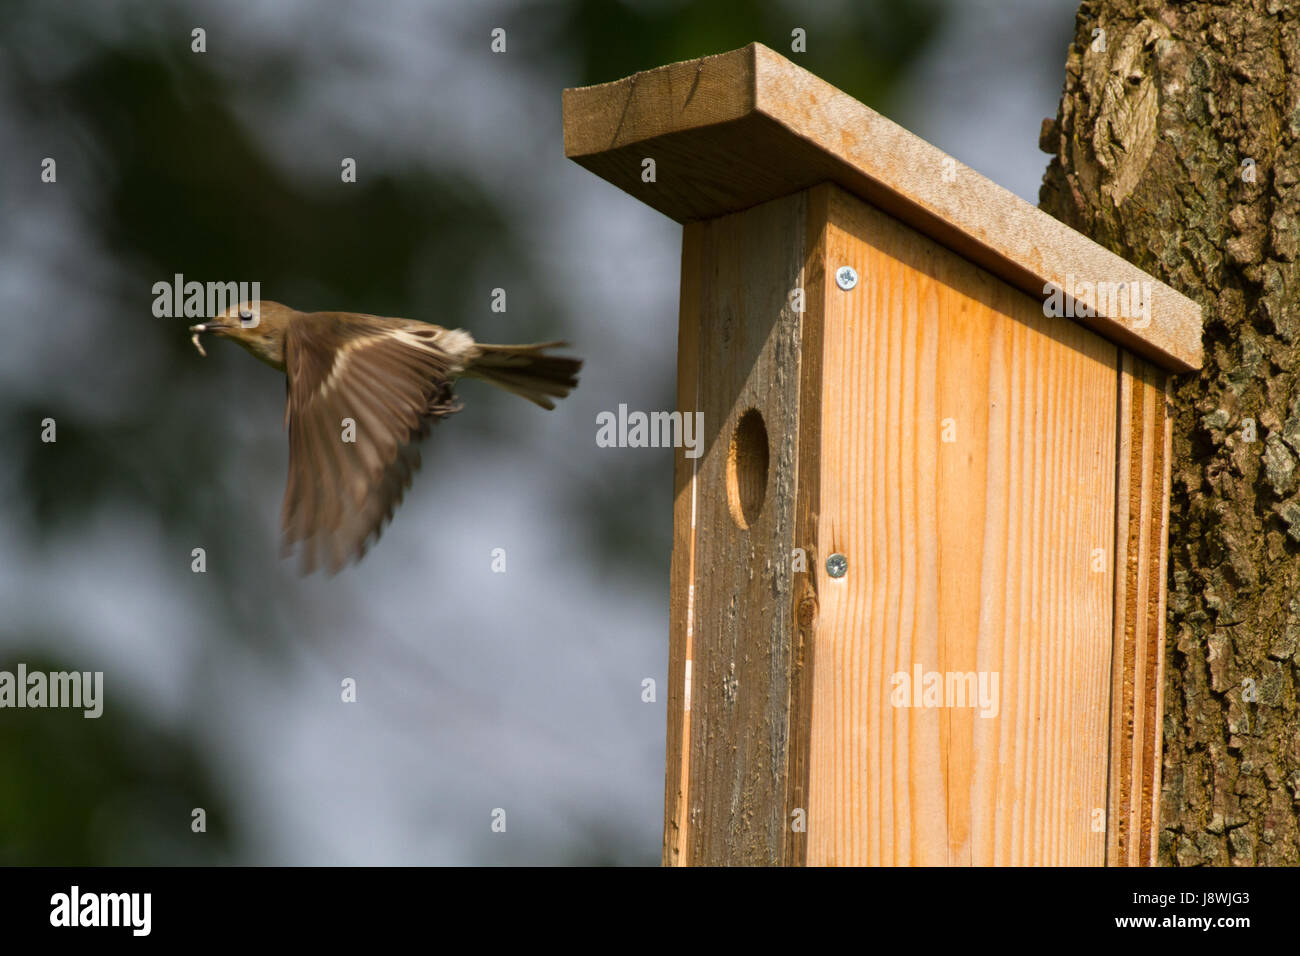 Europeo femminile pied flycatcher lasciando birdhouse Foto Stock